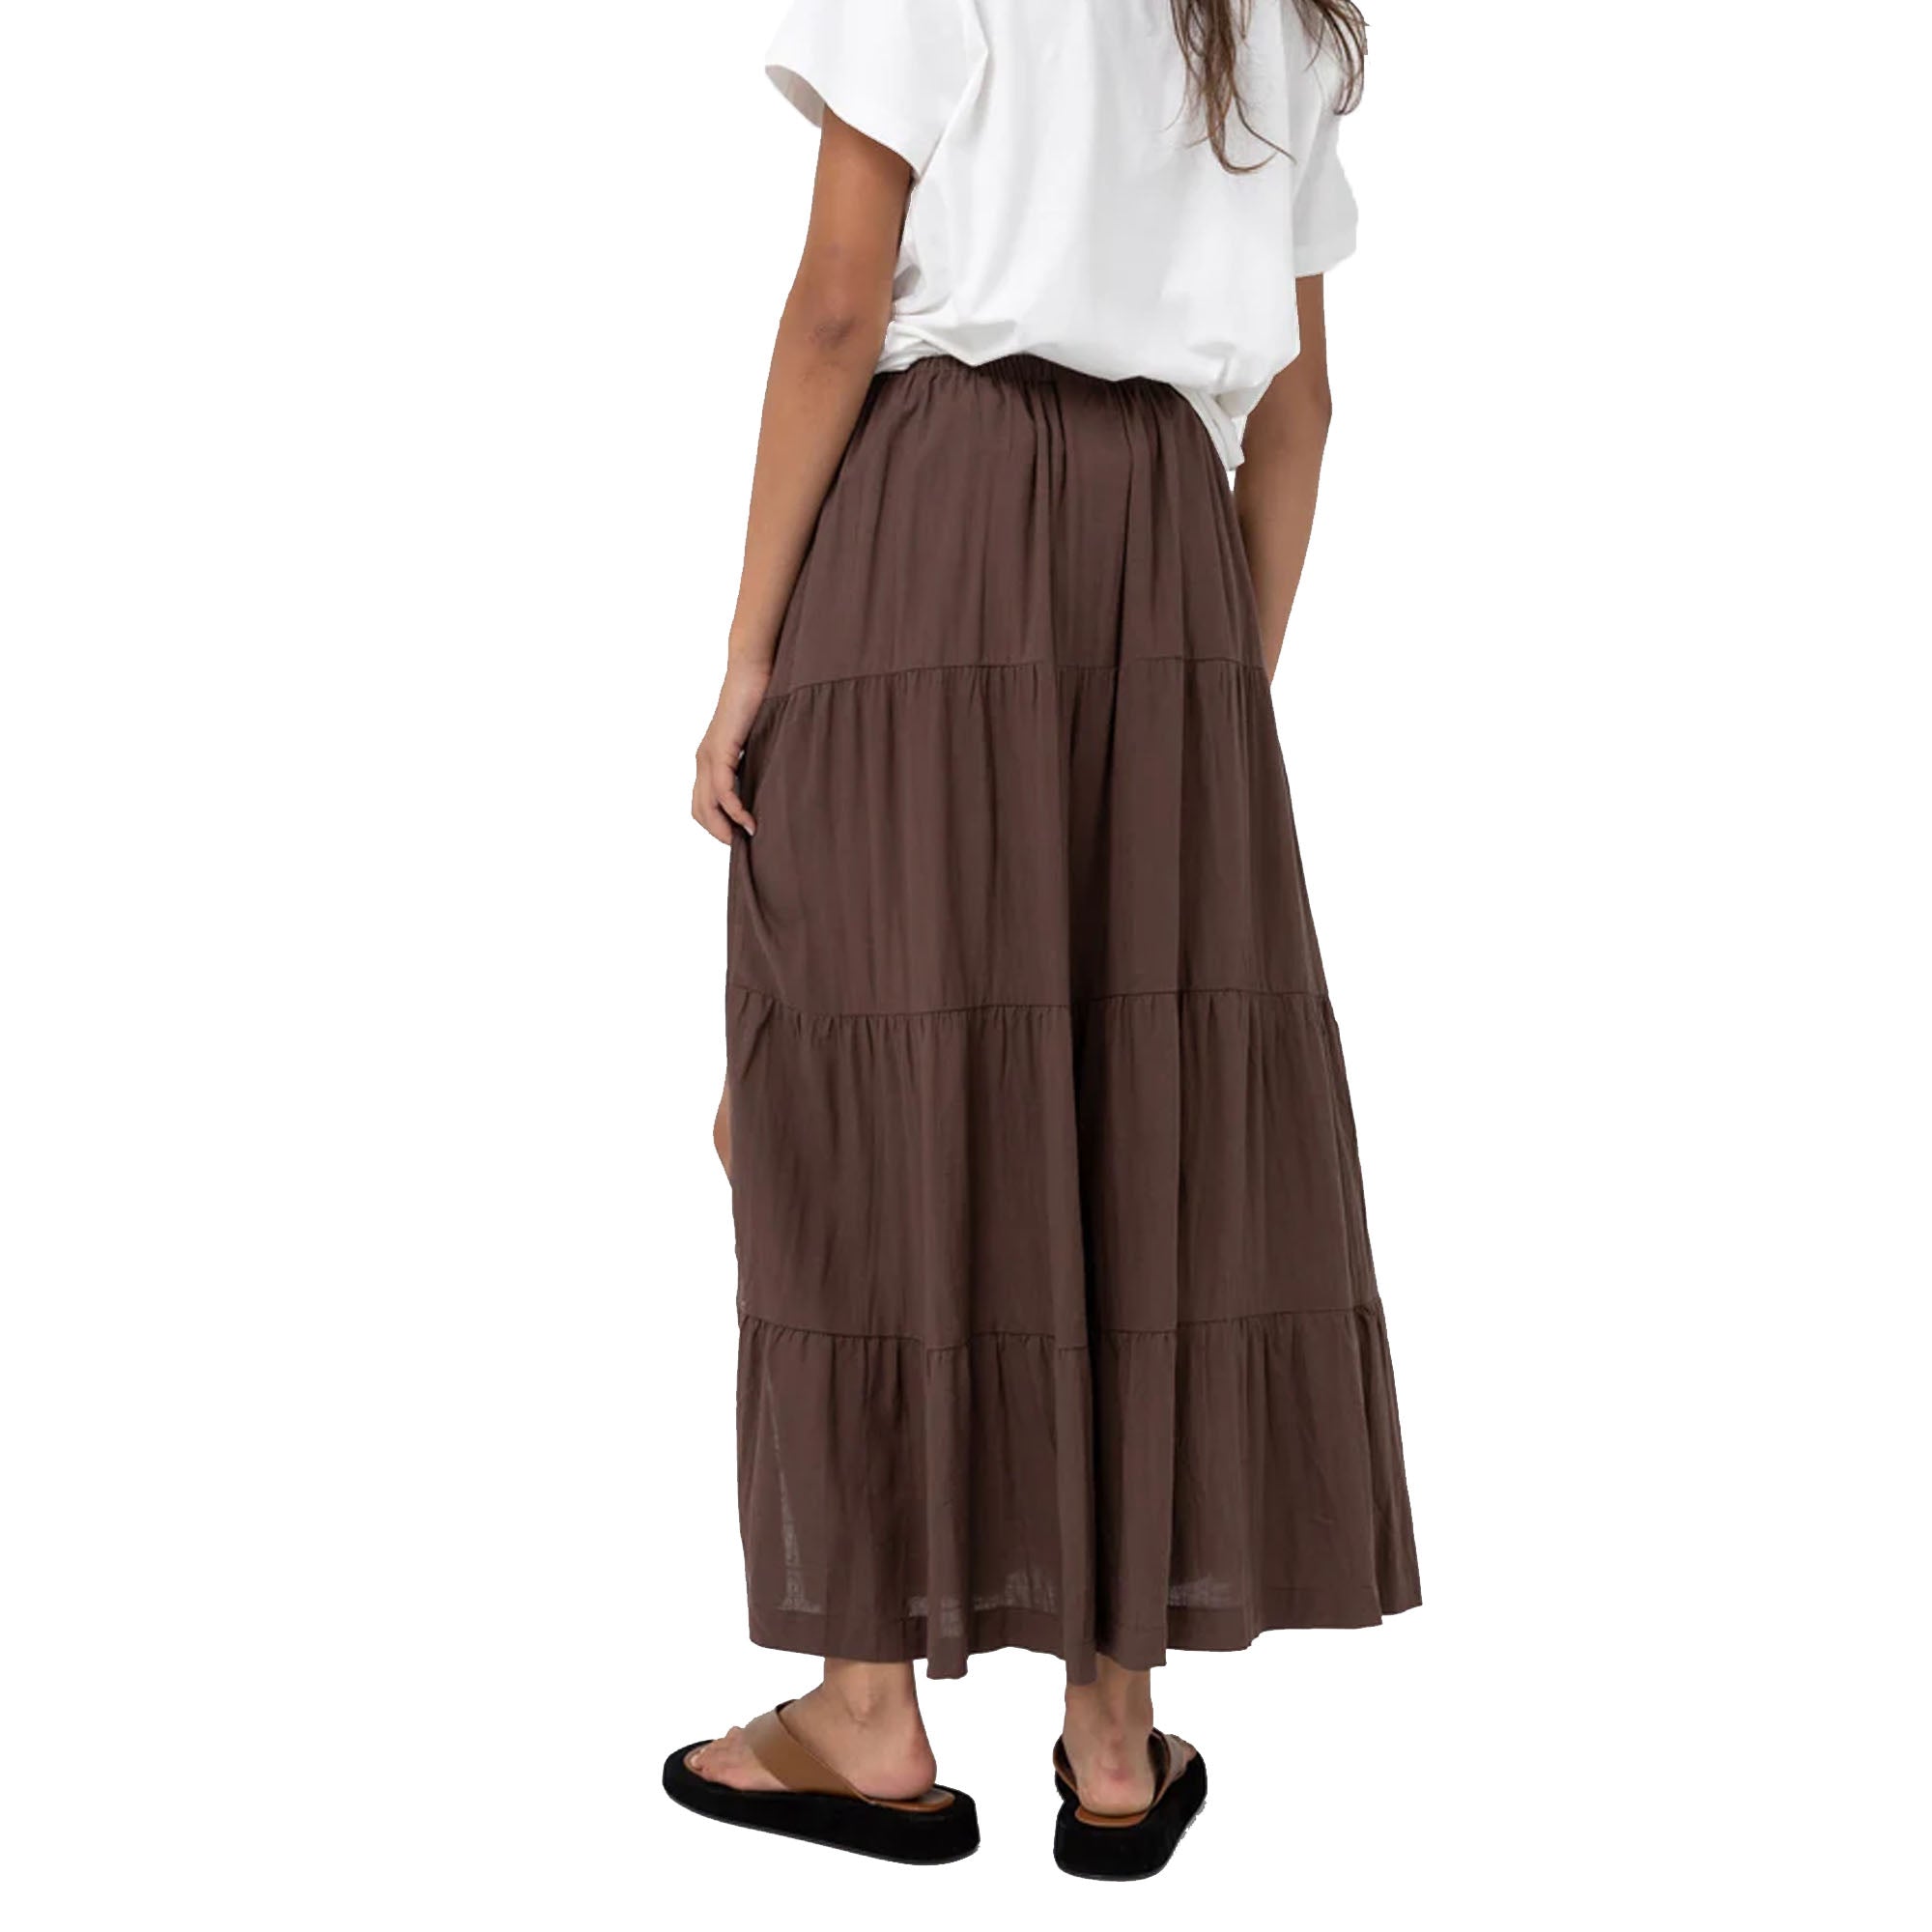 Rhythm Classic Tiered Maxi Women's Skirt